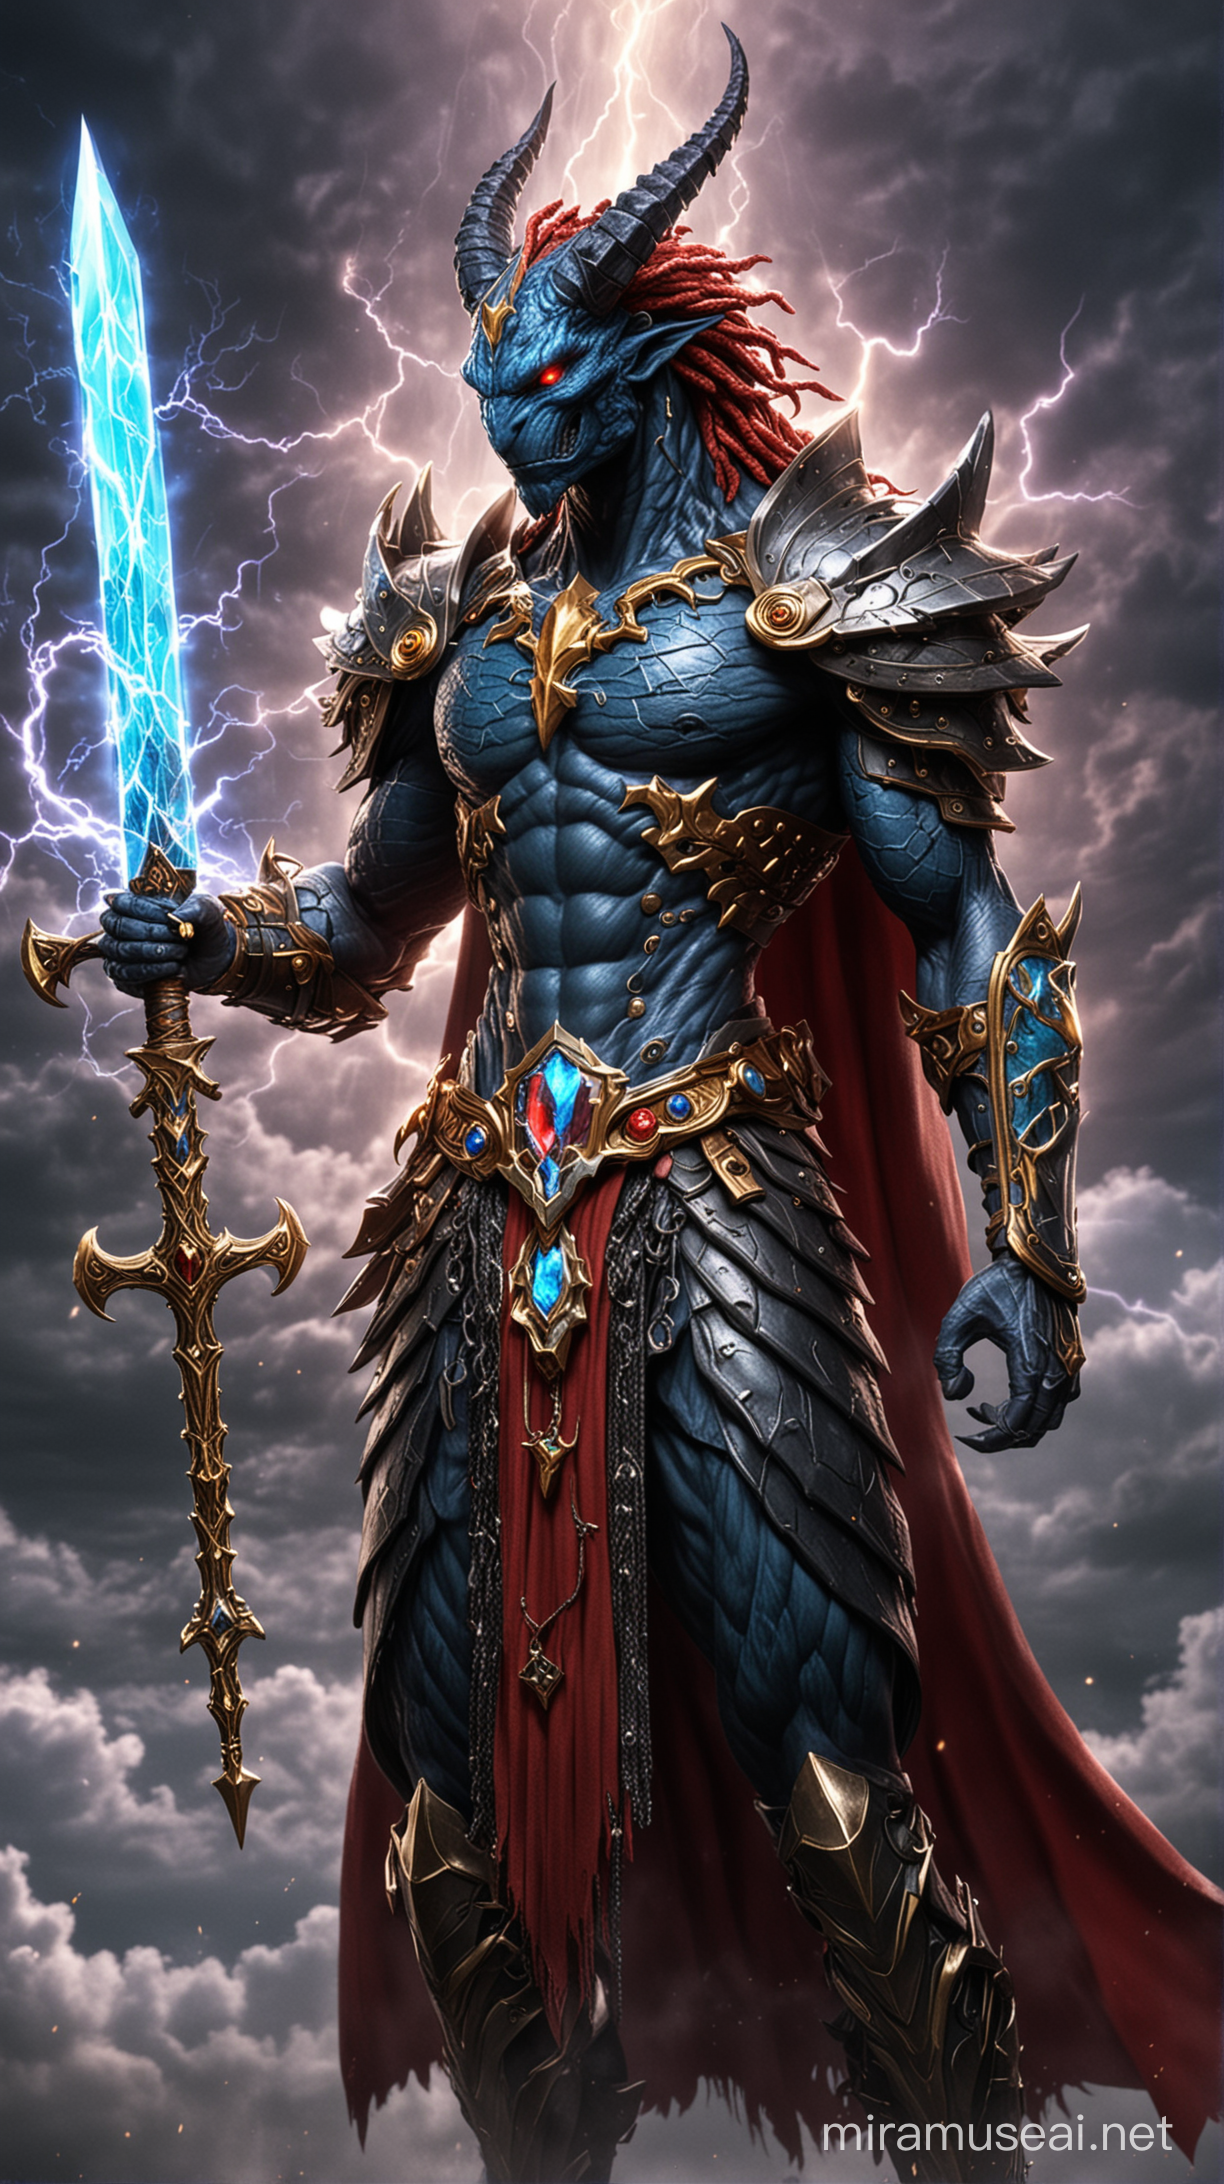 Enchanted Dragonoid Seraph Warrior in Technological Armor